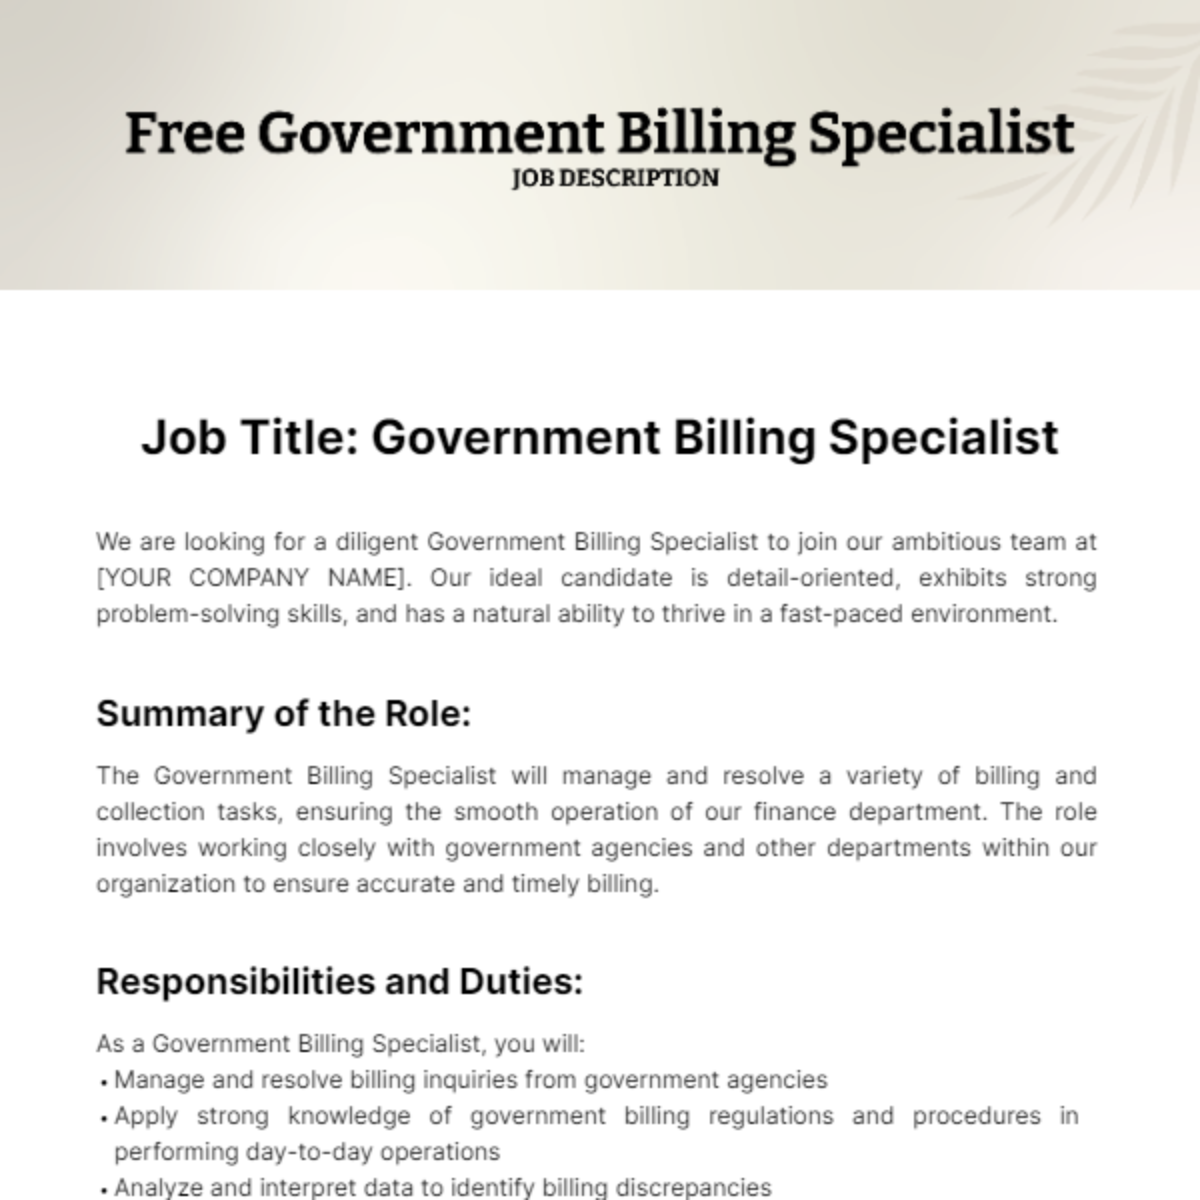 Government Billing Specialist Job Description Template